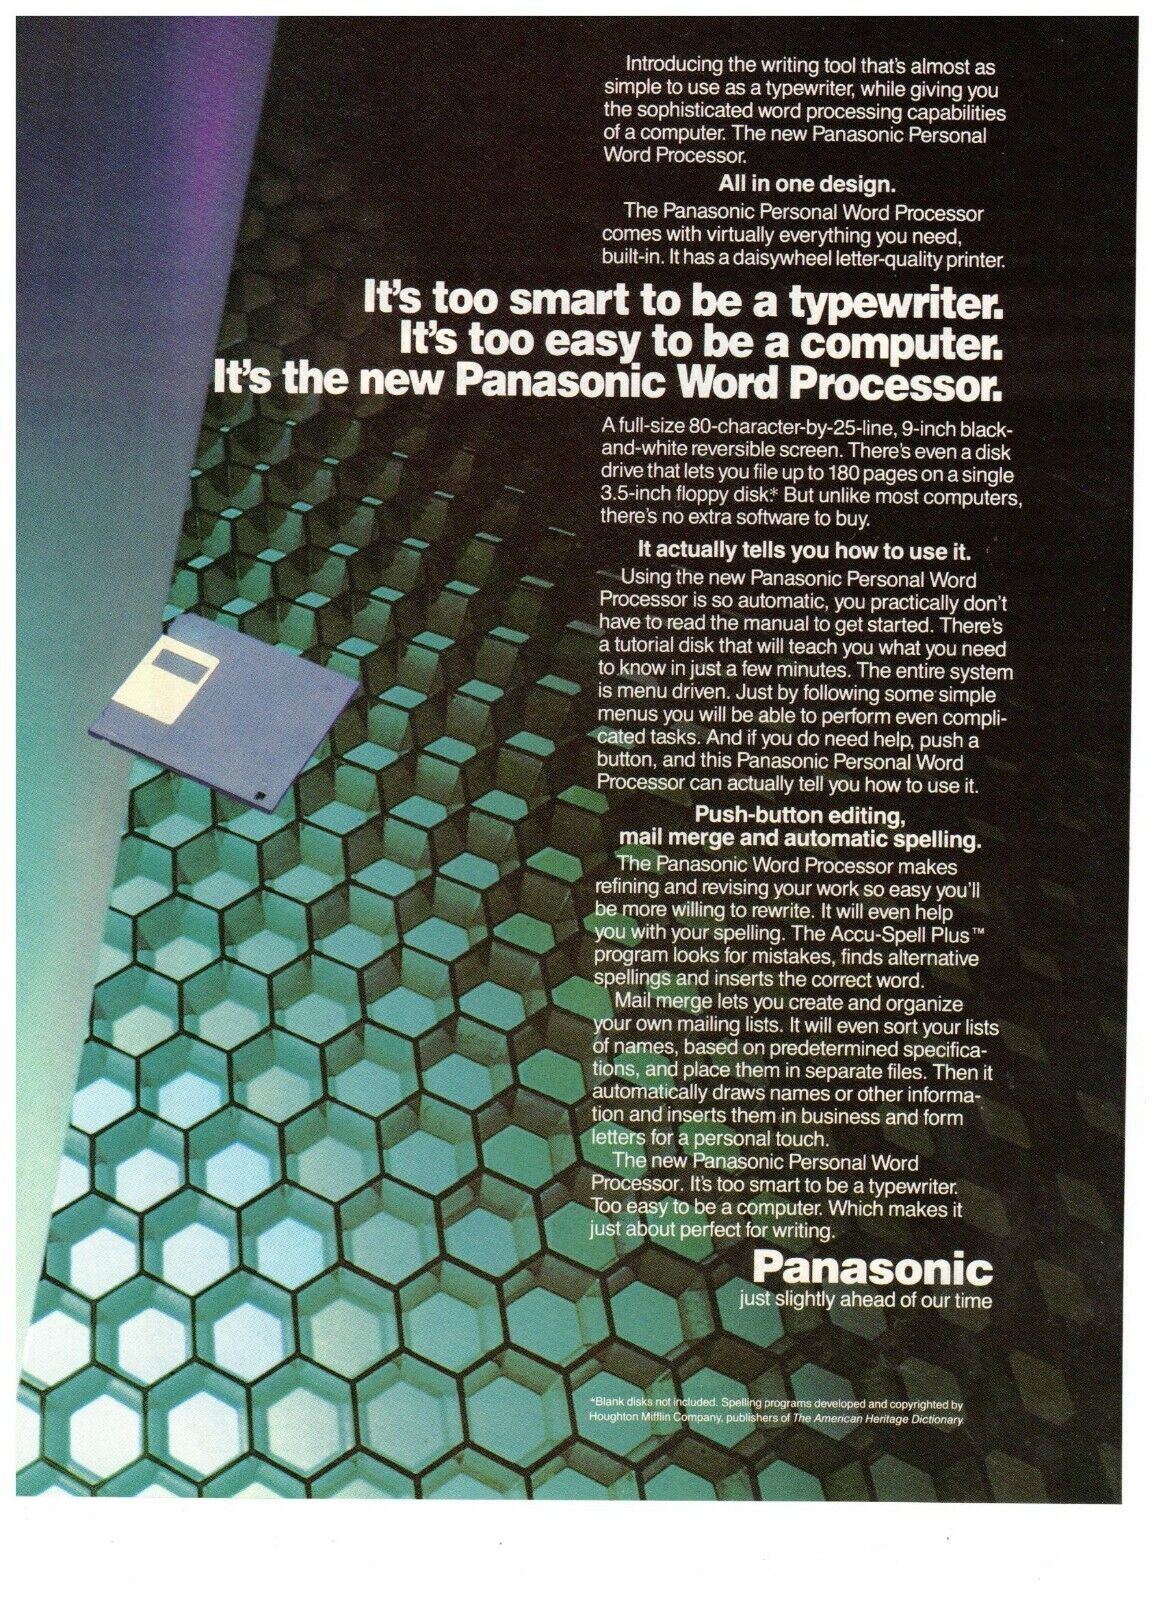 1989 Panasonic Word Processor Floppy Disk Vintage Print Advertisement